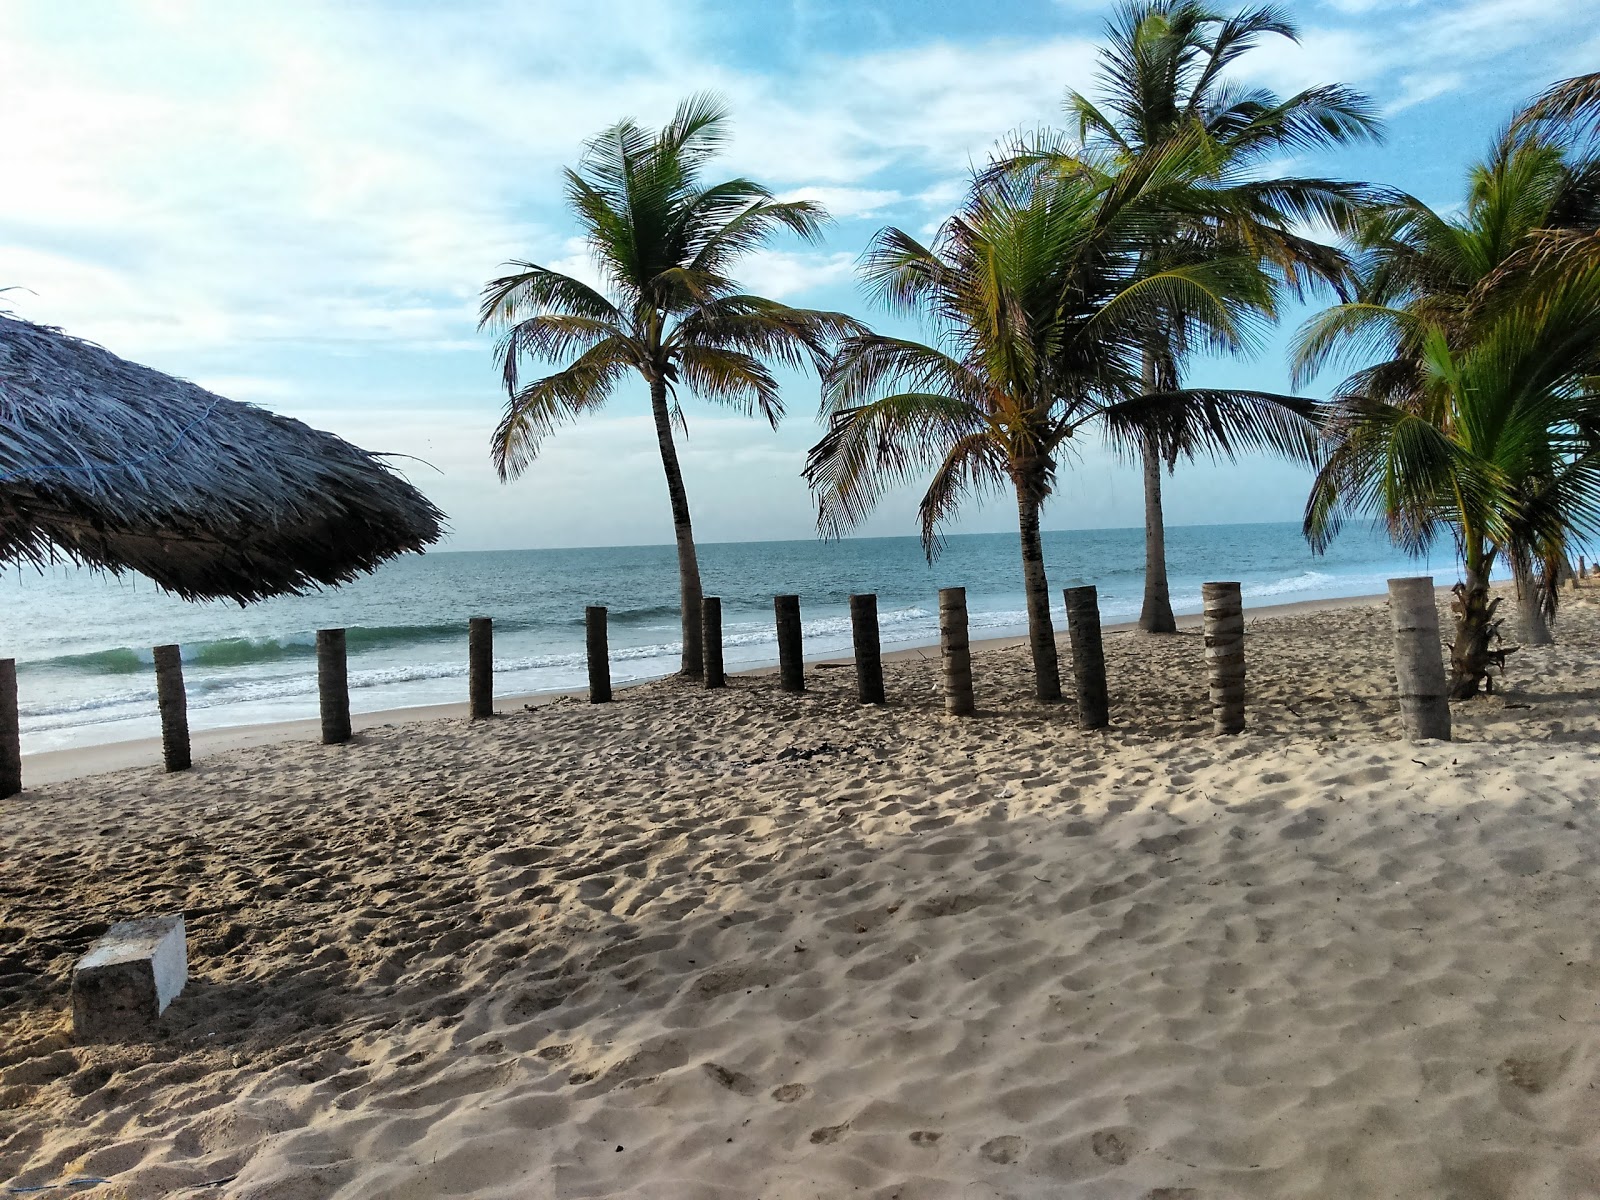 Photo of Miai de Cima Beach - popular place among relax connoisseurs